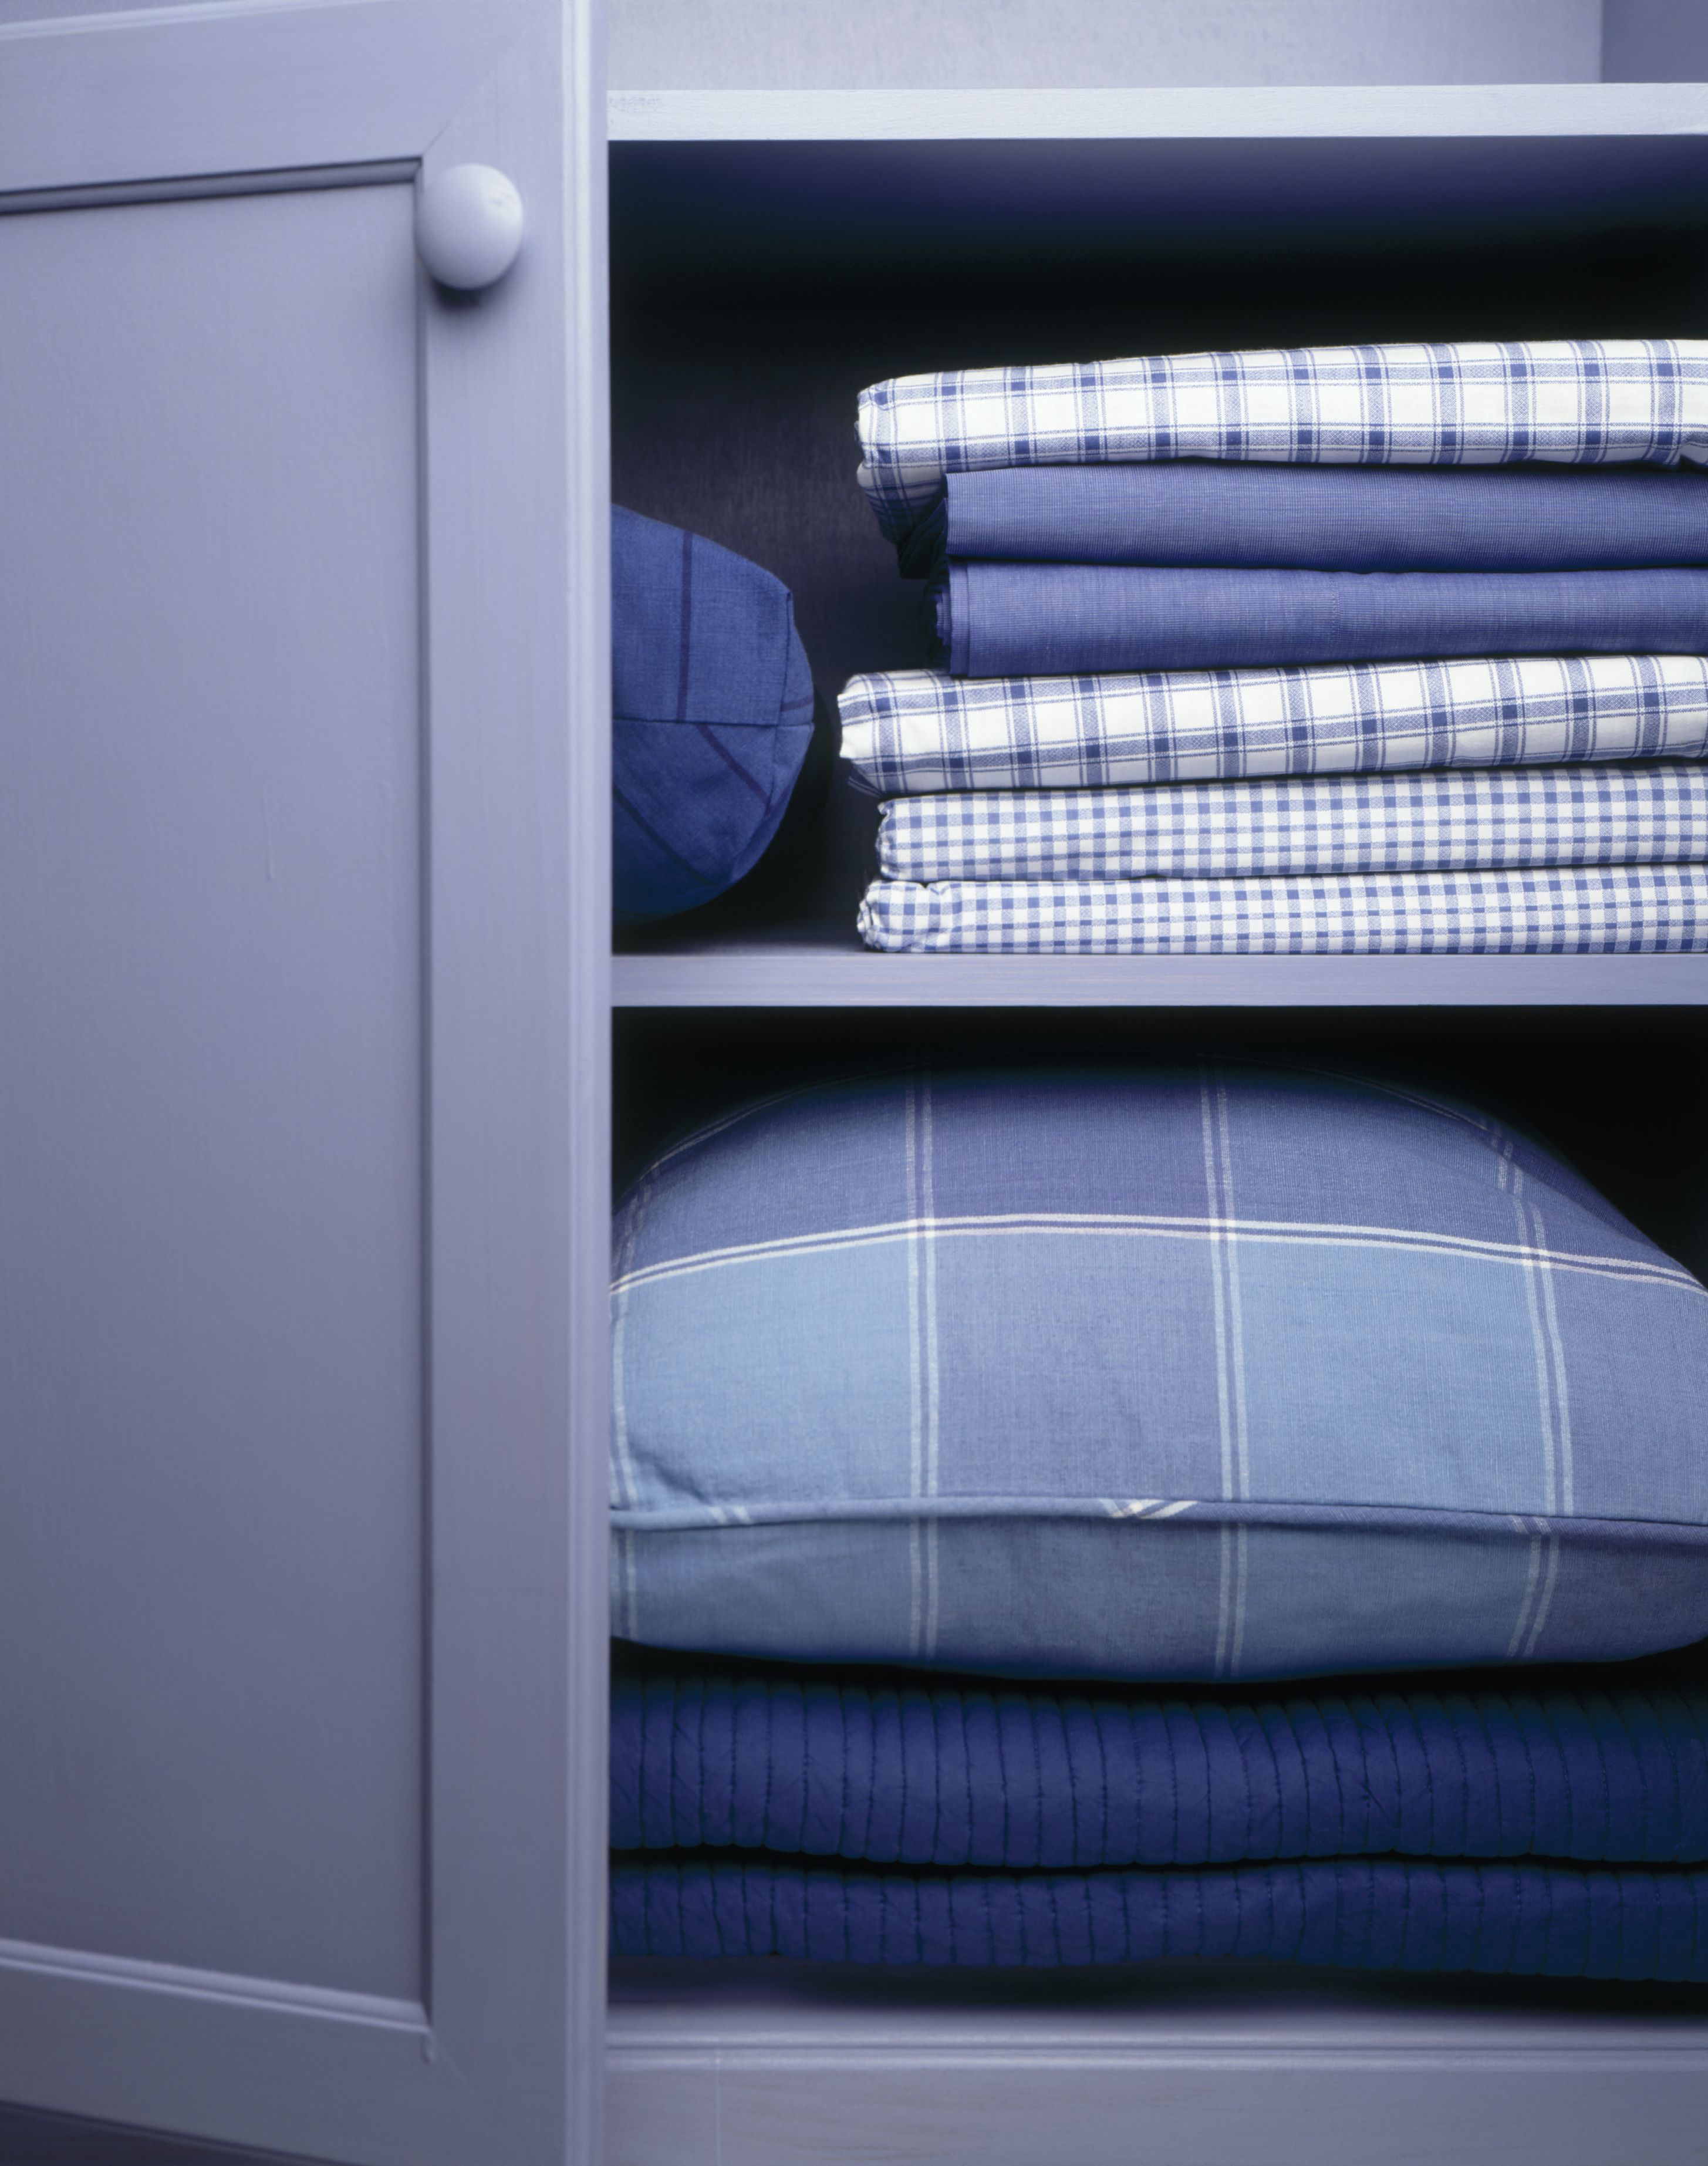 Linen Closet Organization Tips and Tricks - Twelve On Main